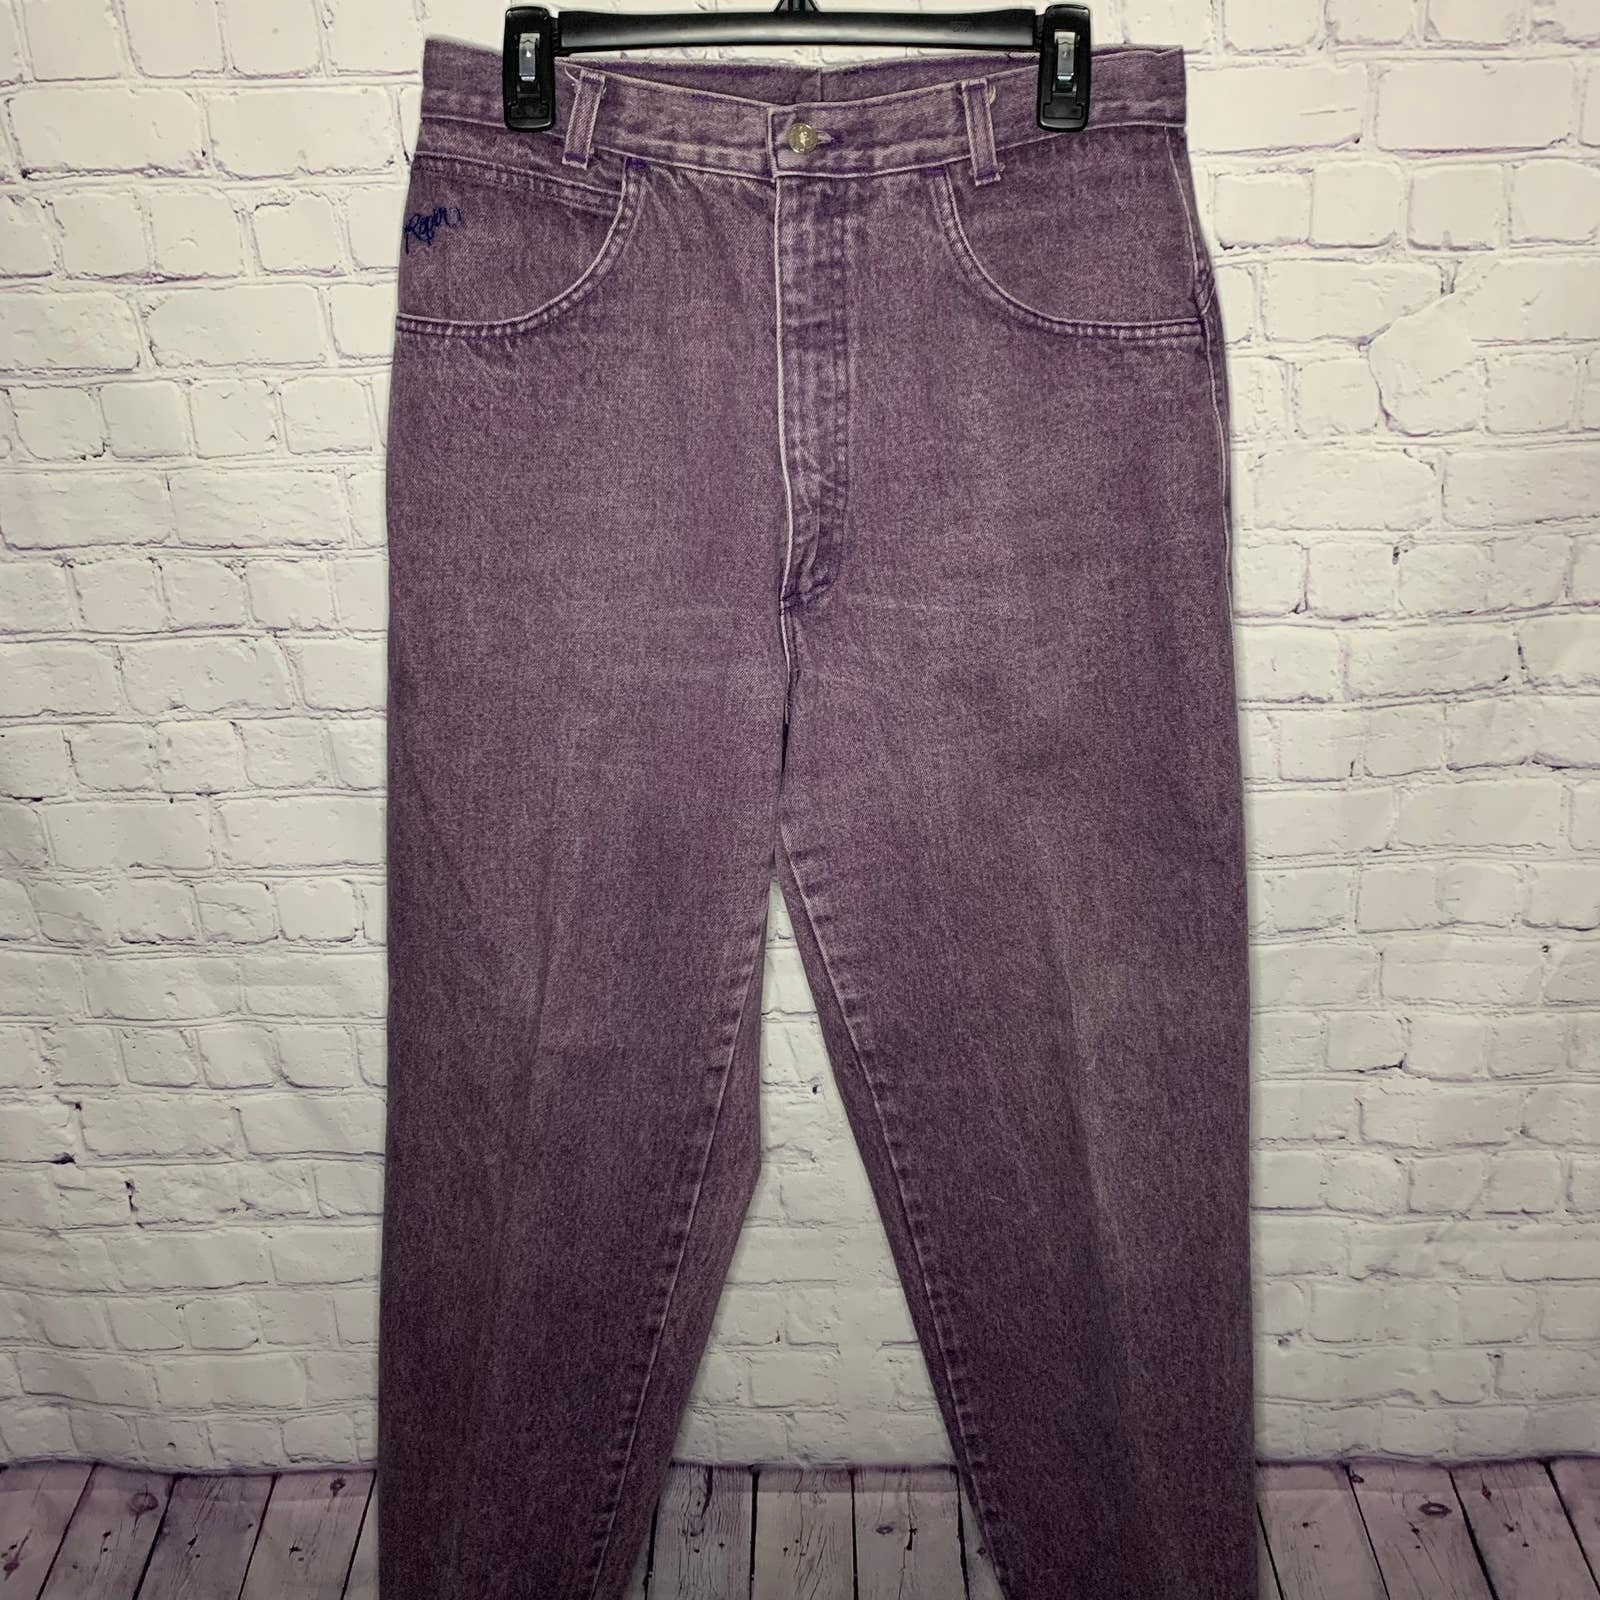 Purple Brand Jeans Size 36 for Sale in Henderson, NV - OfferUp